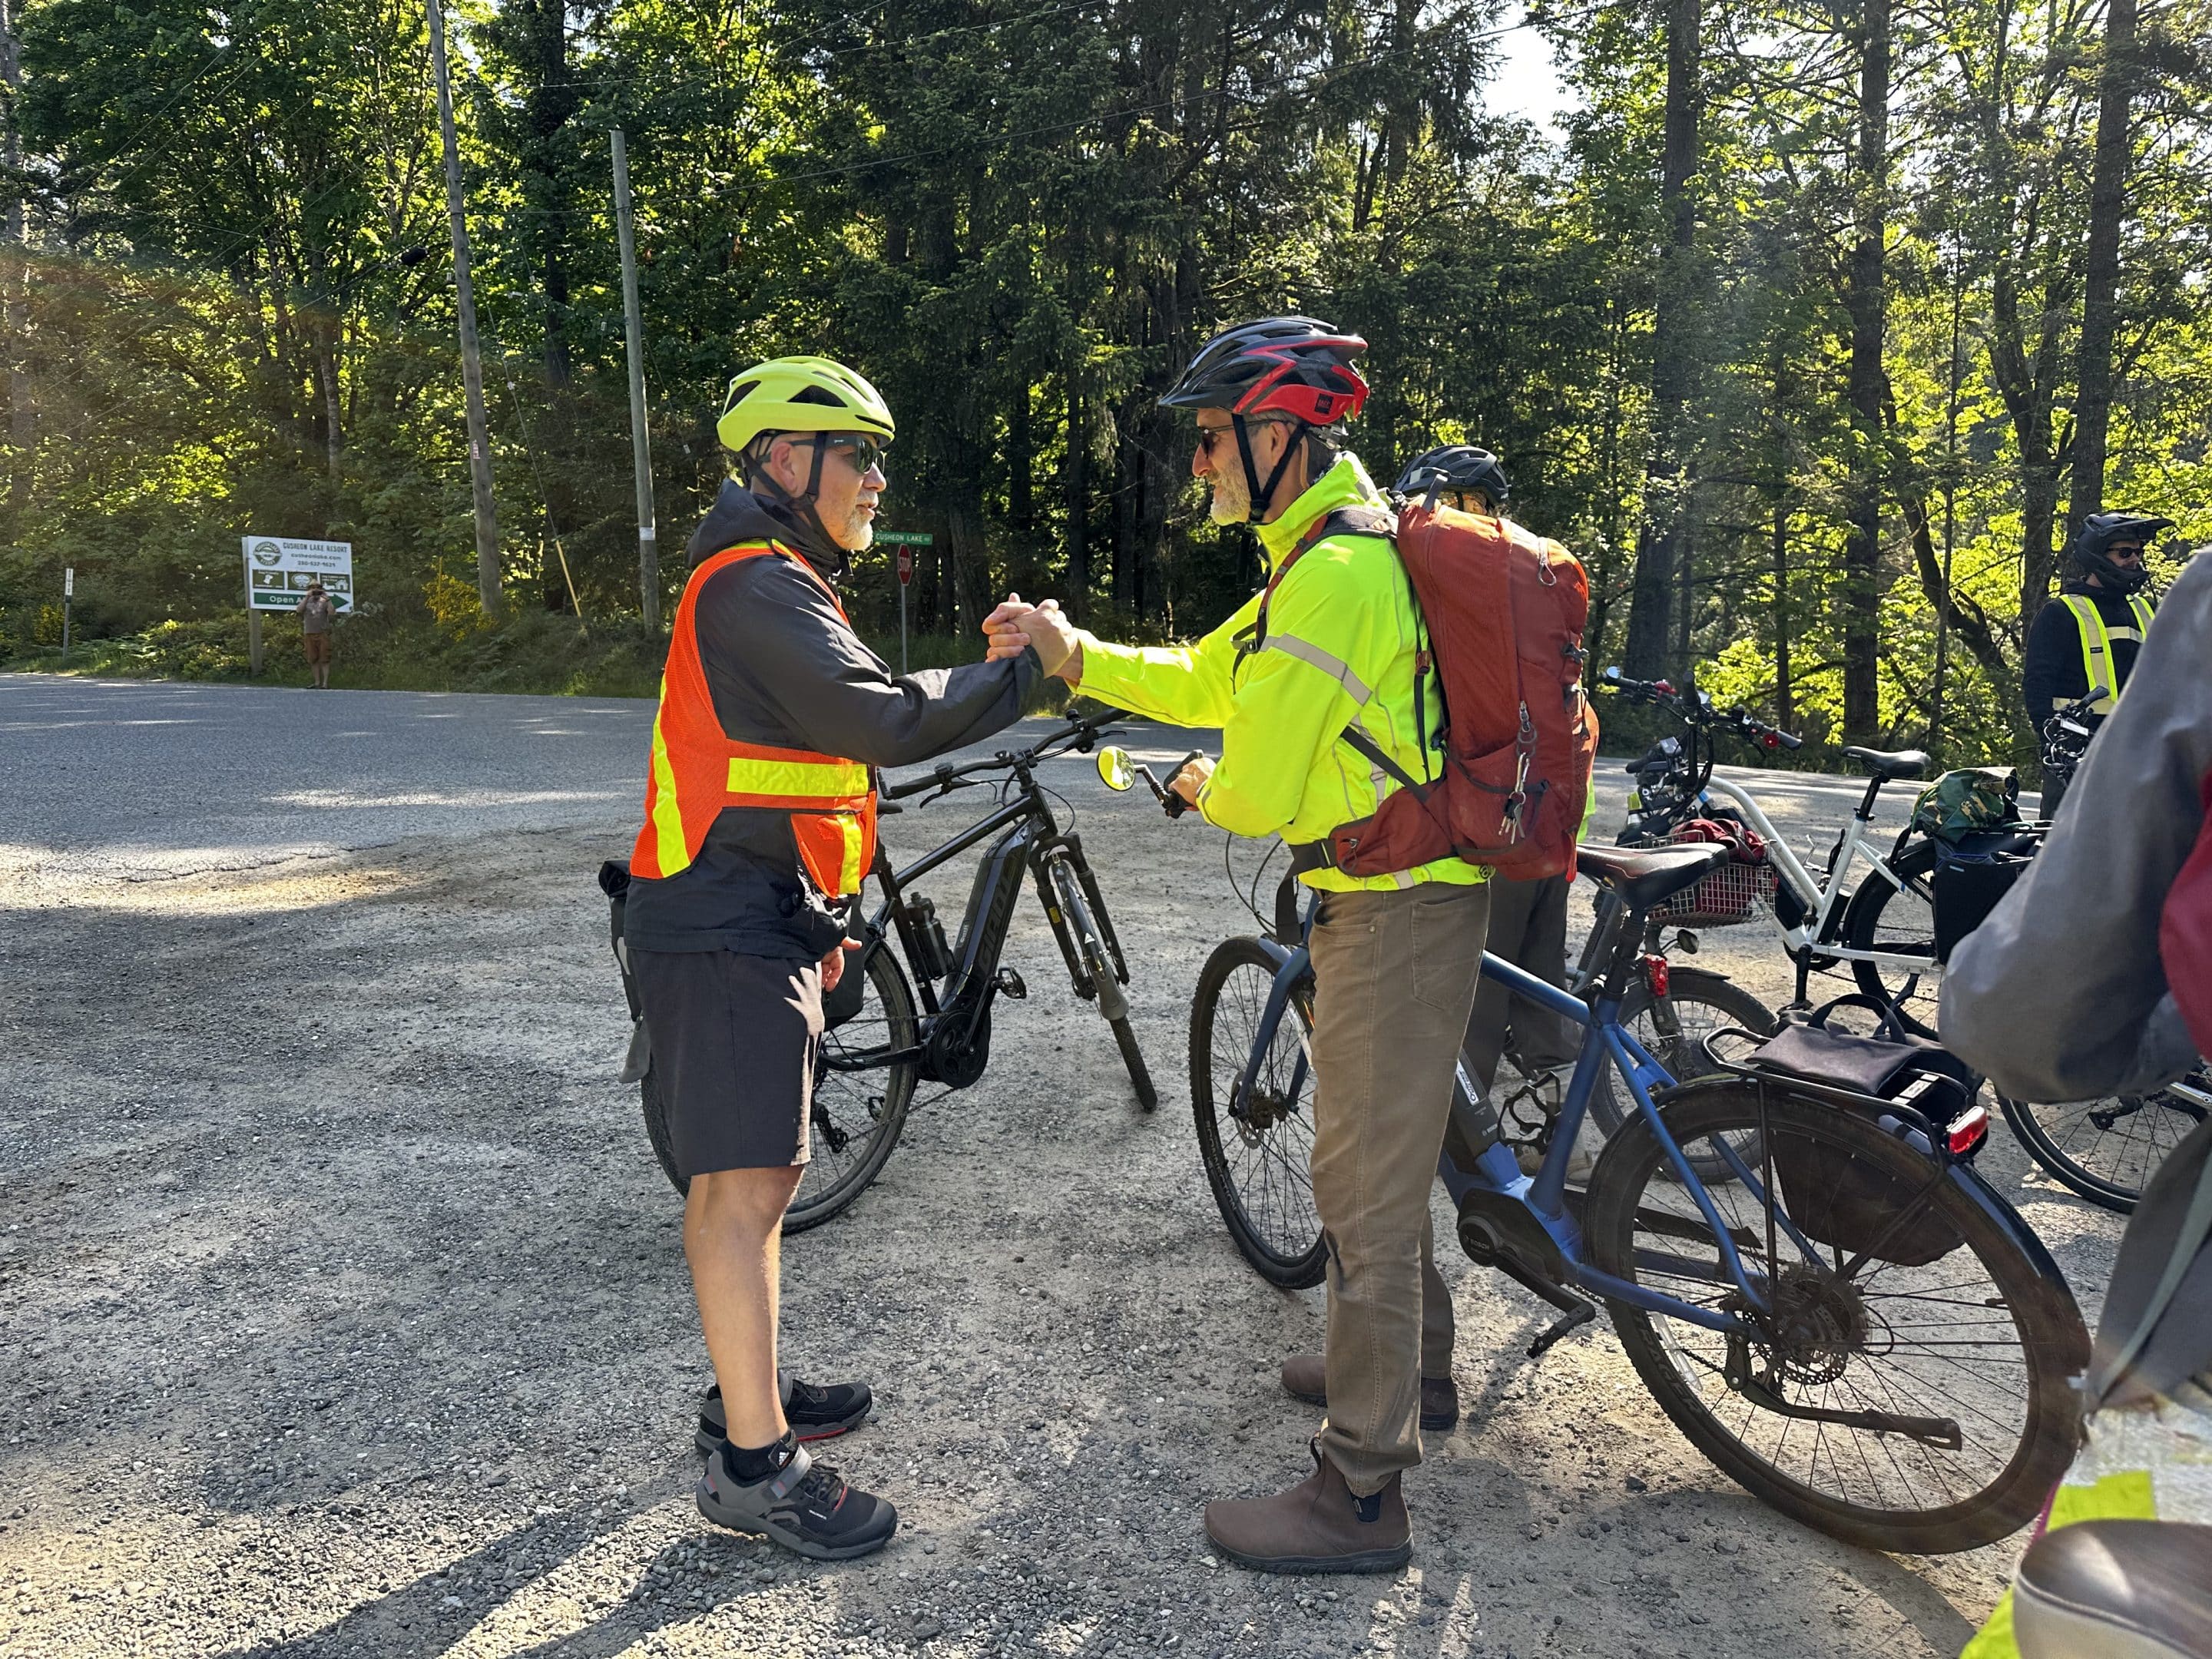 Adam Olsen, MLA meeting Bryan Young from Transition Salt Spring on the morning bike ride.